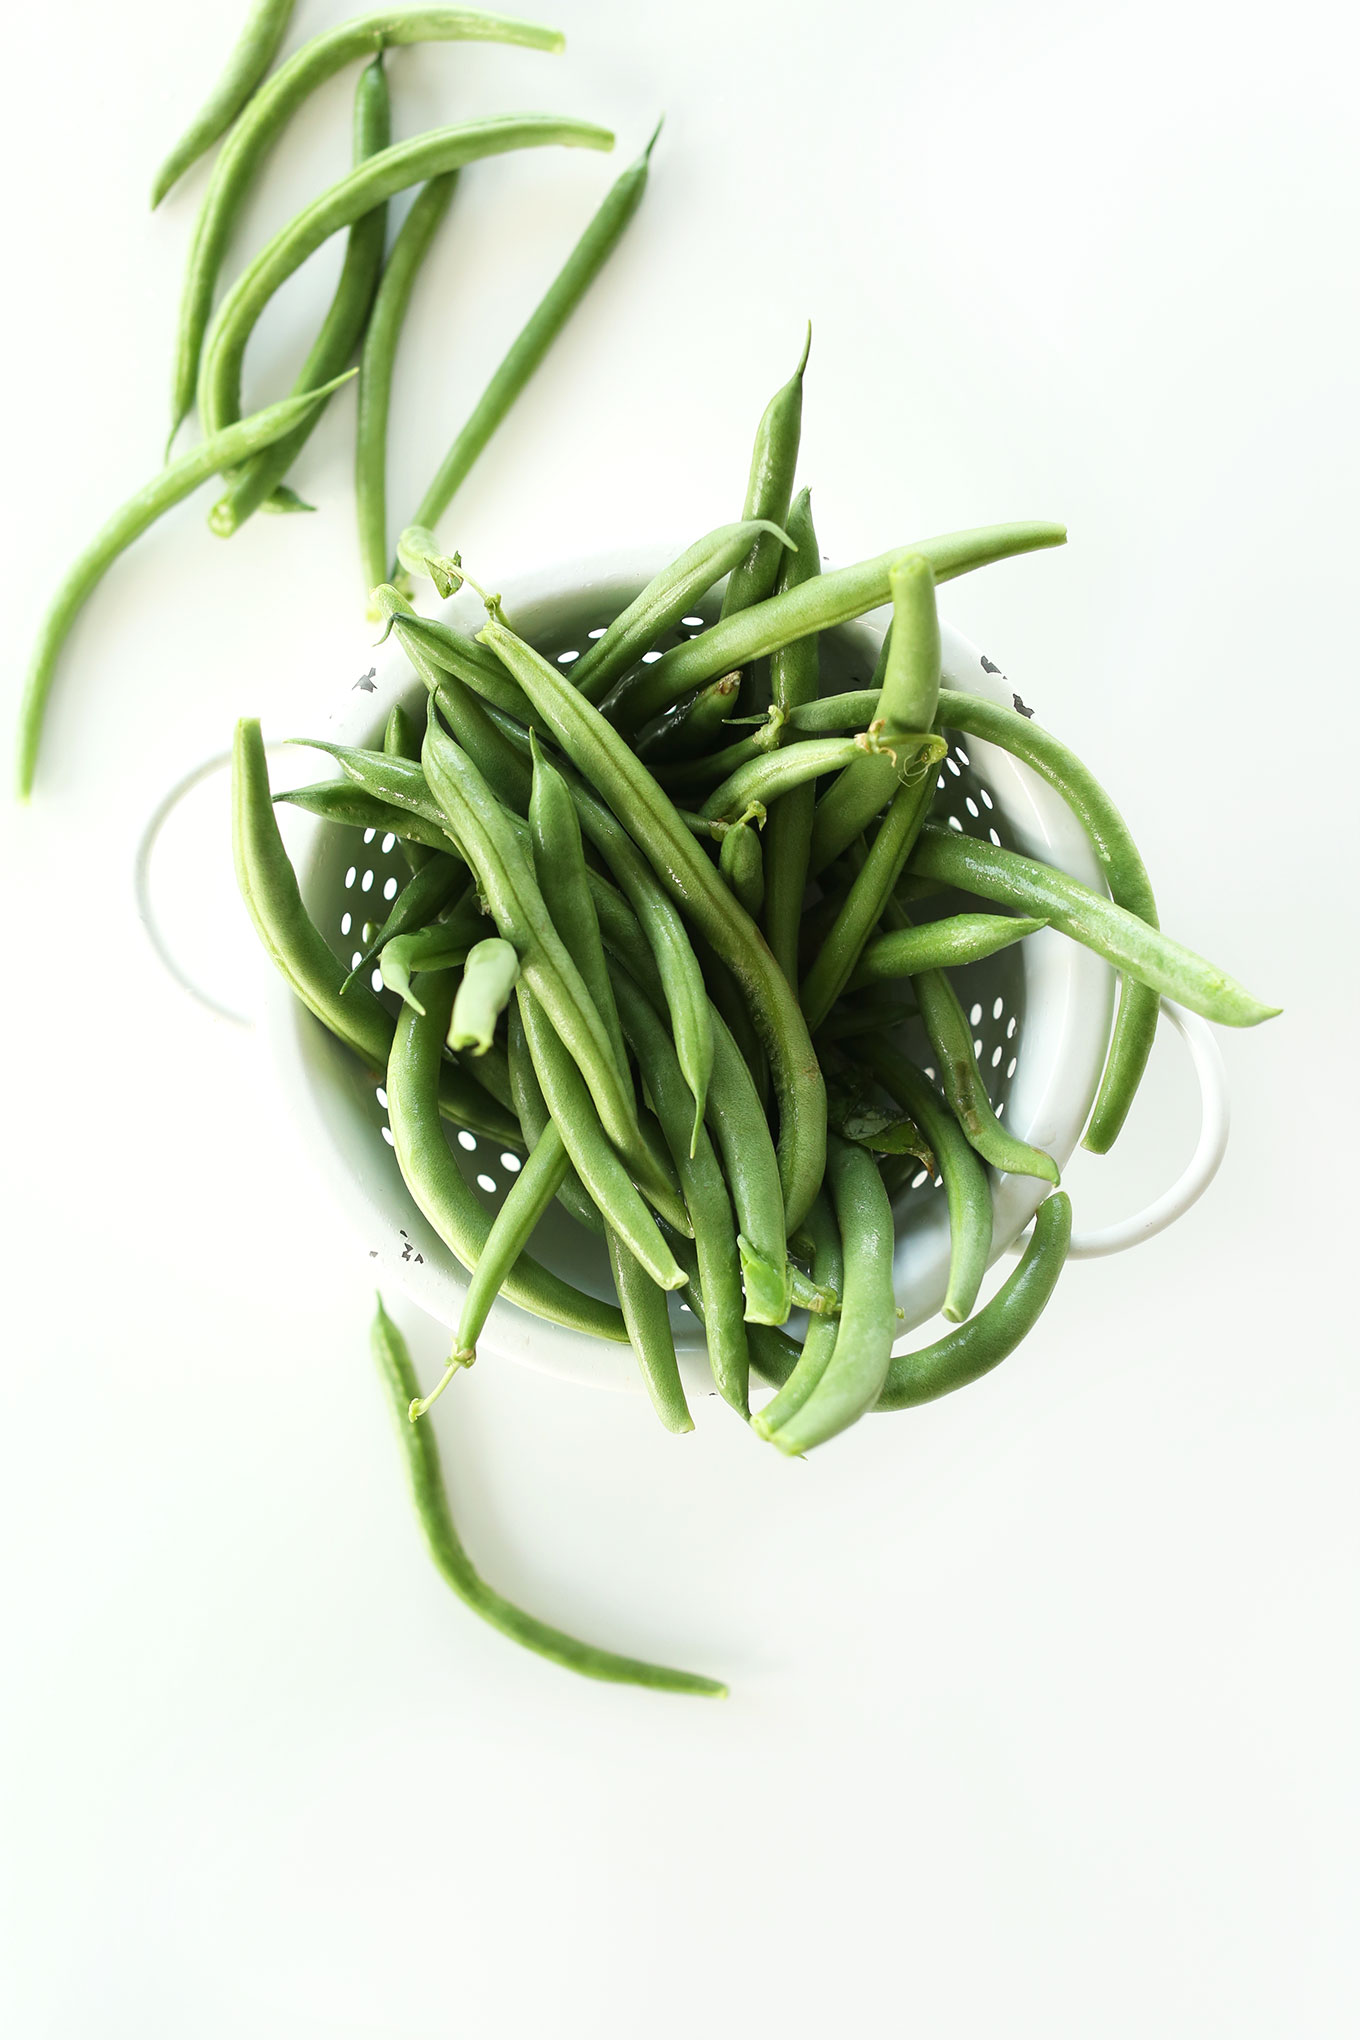 Fresh green beans for making our Vegan Green Bean Casserole recipe